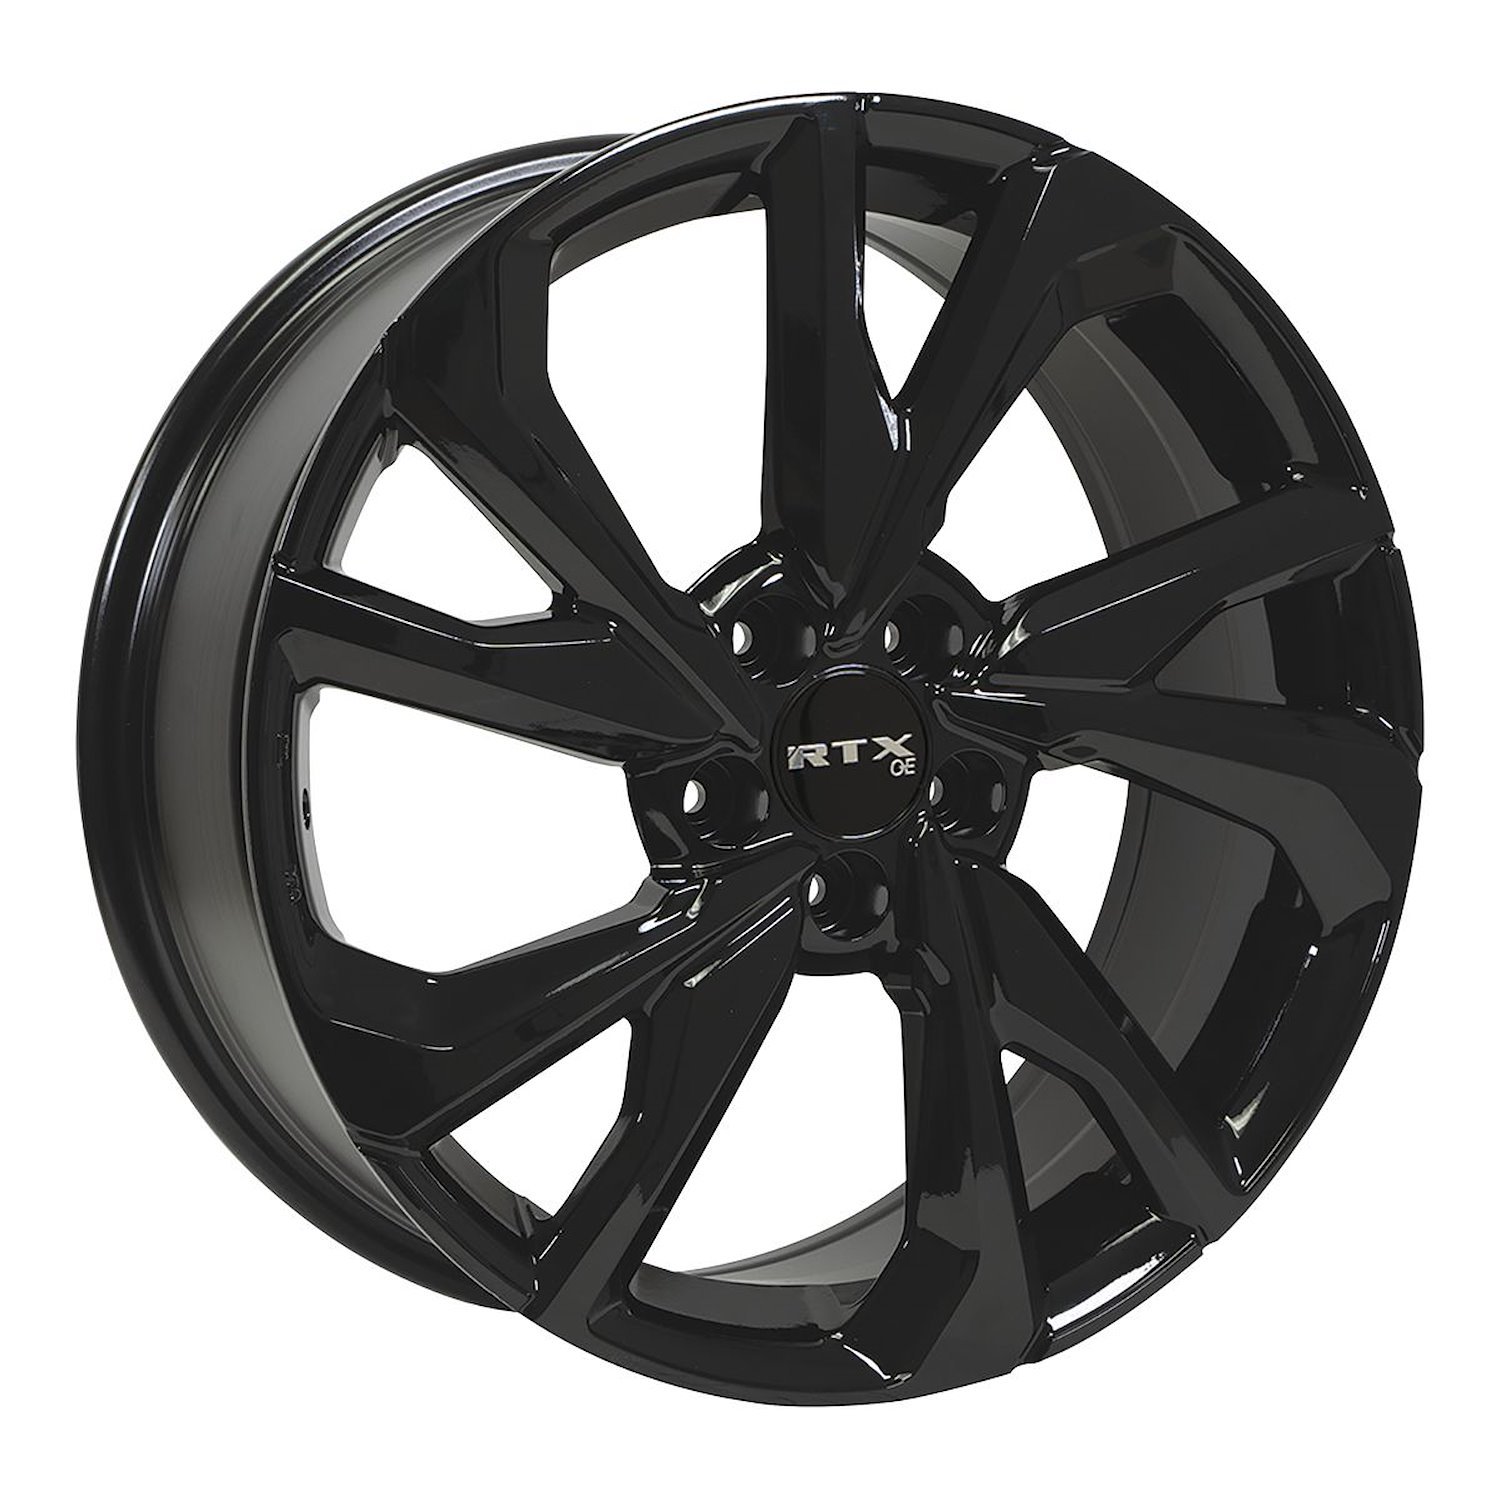 082233 OE-Series Nikko Wheel [Size: 17" x 7.50"] Gloss Black Finish